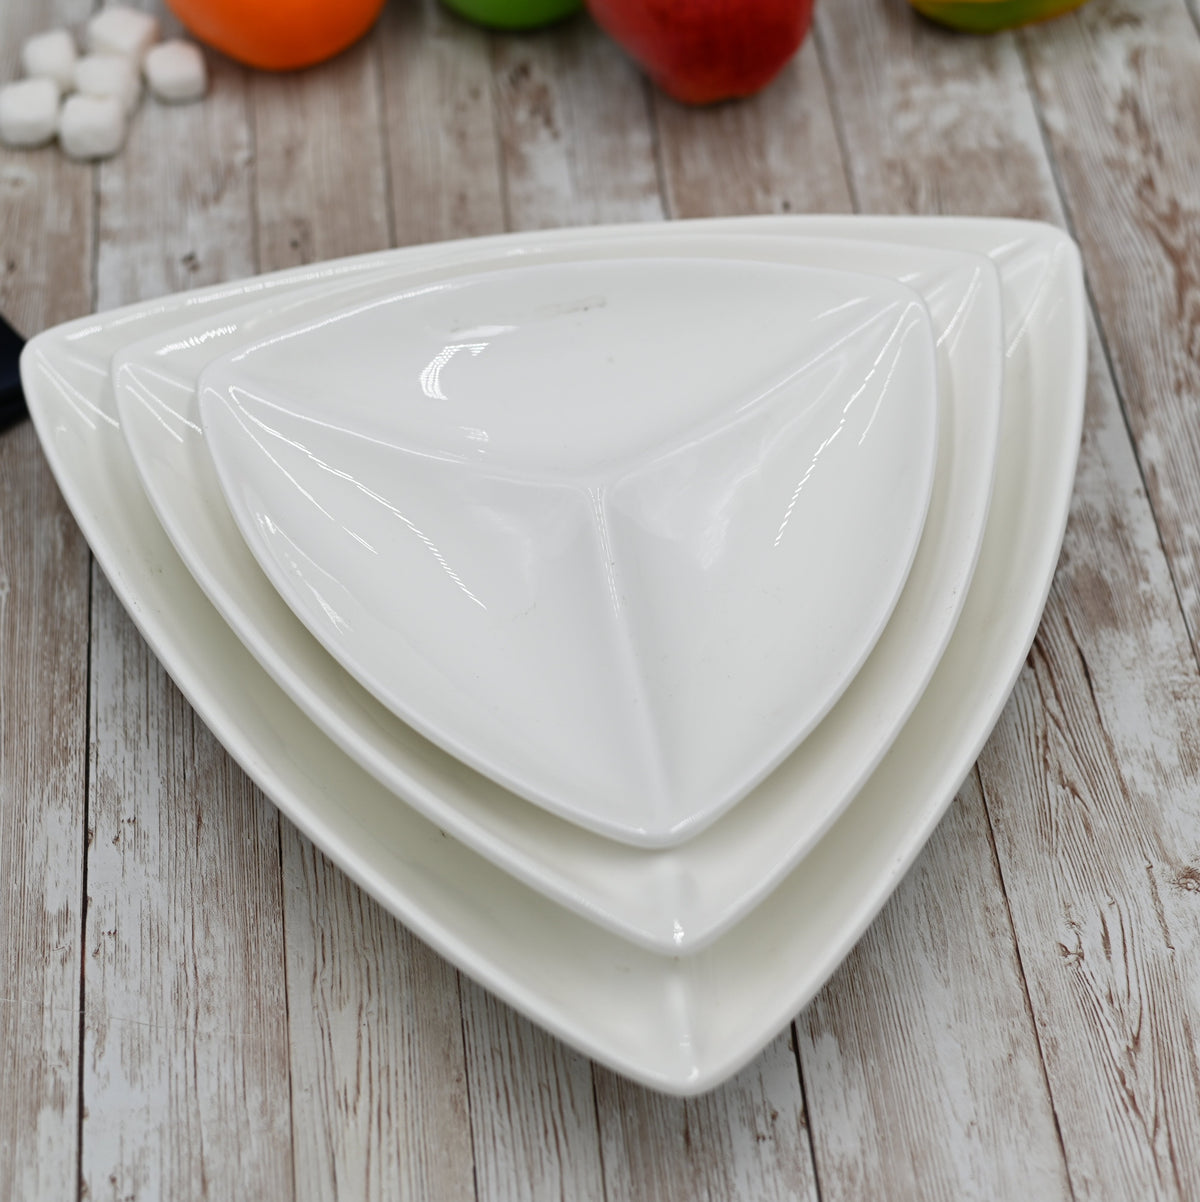 Wilmax Fine Porcelain Divided Triangular Dish 11.5" | 29 Cm SKU: WL-992586/A